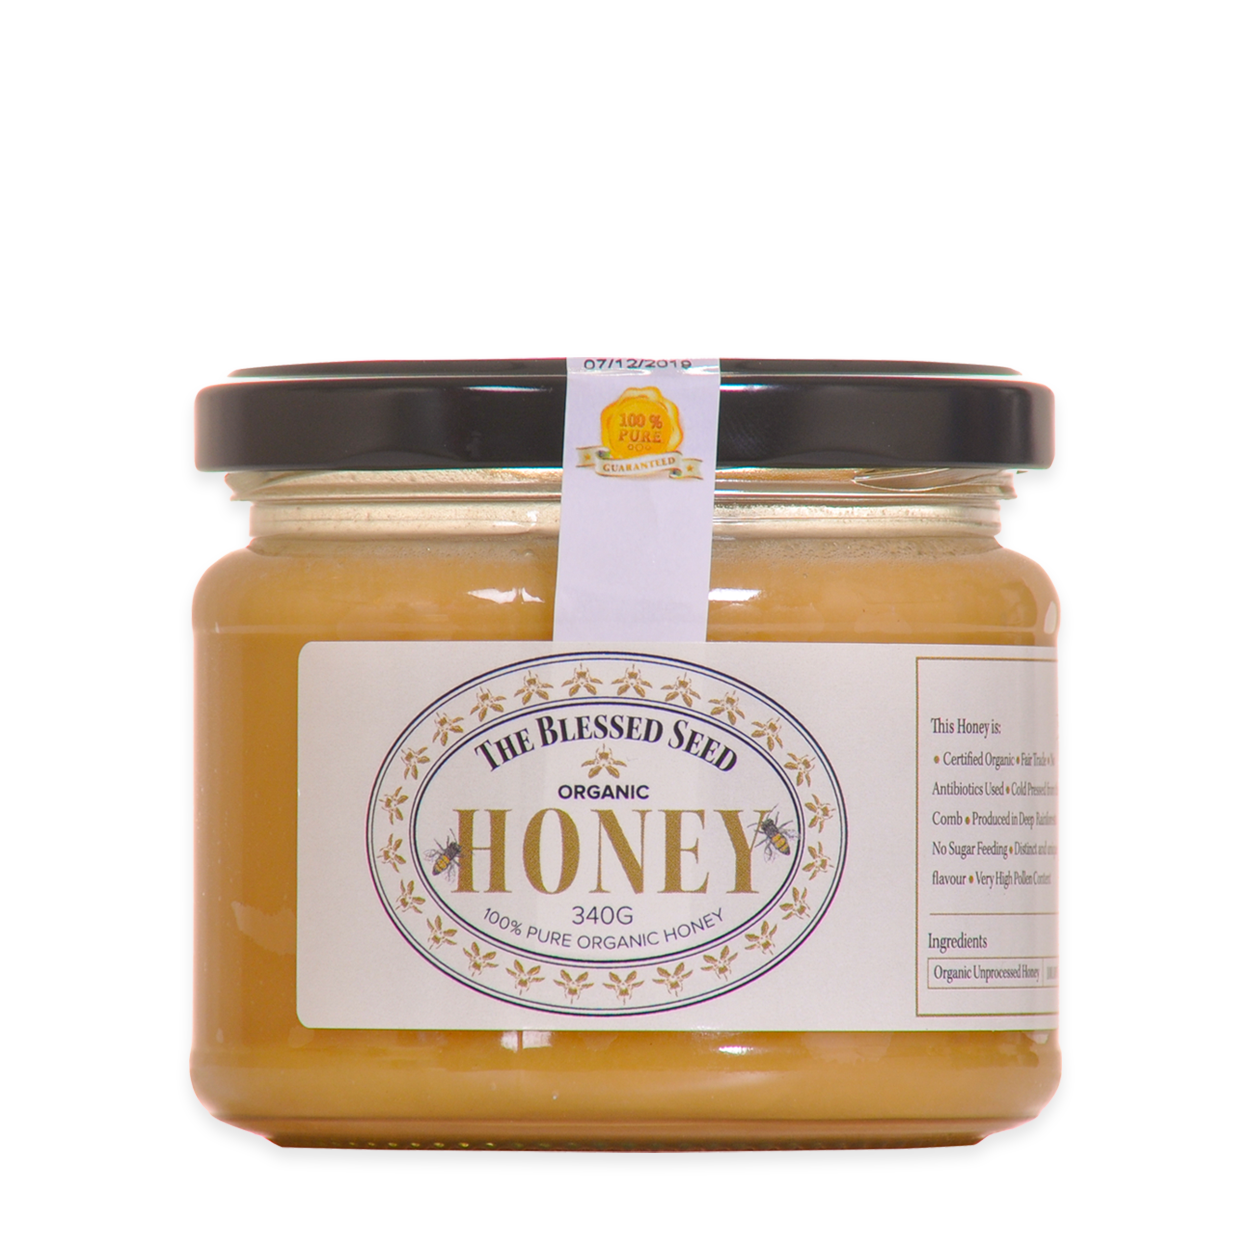 Organic Honey. Емкость для меда in the Forest. Organic Honey London. Bashkirian Organic Honey.